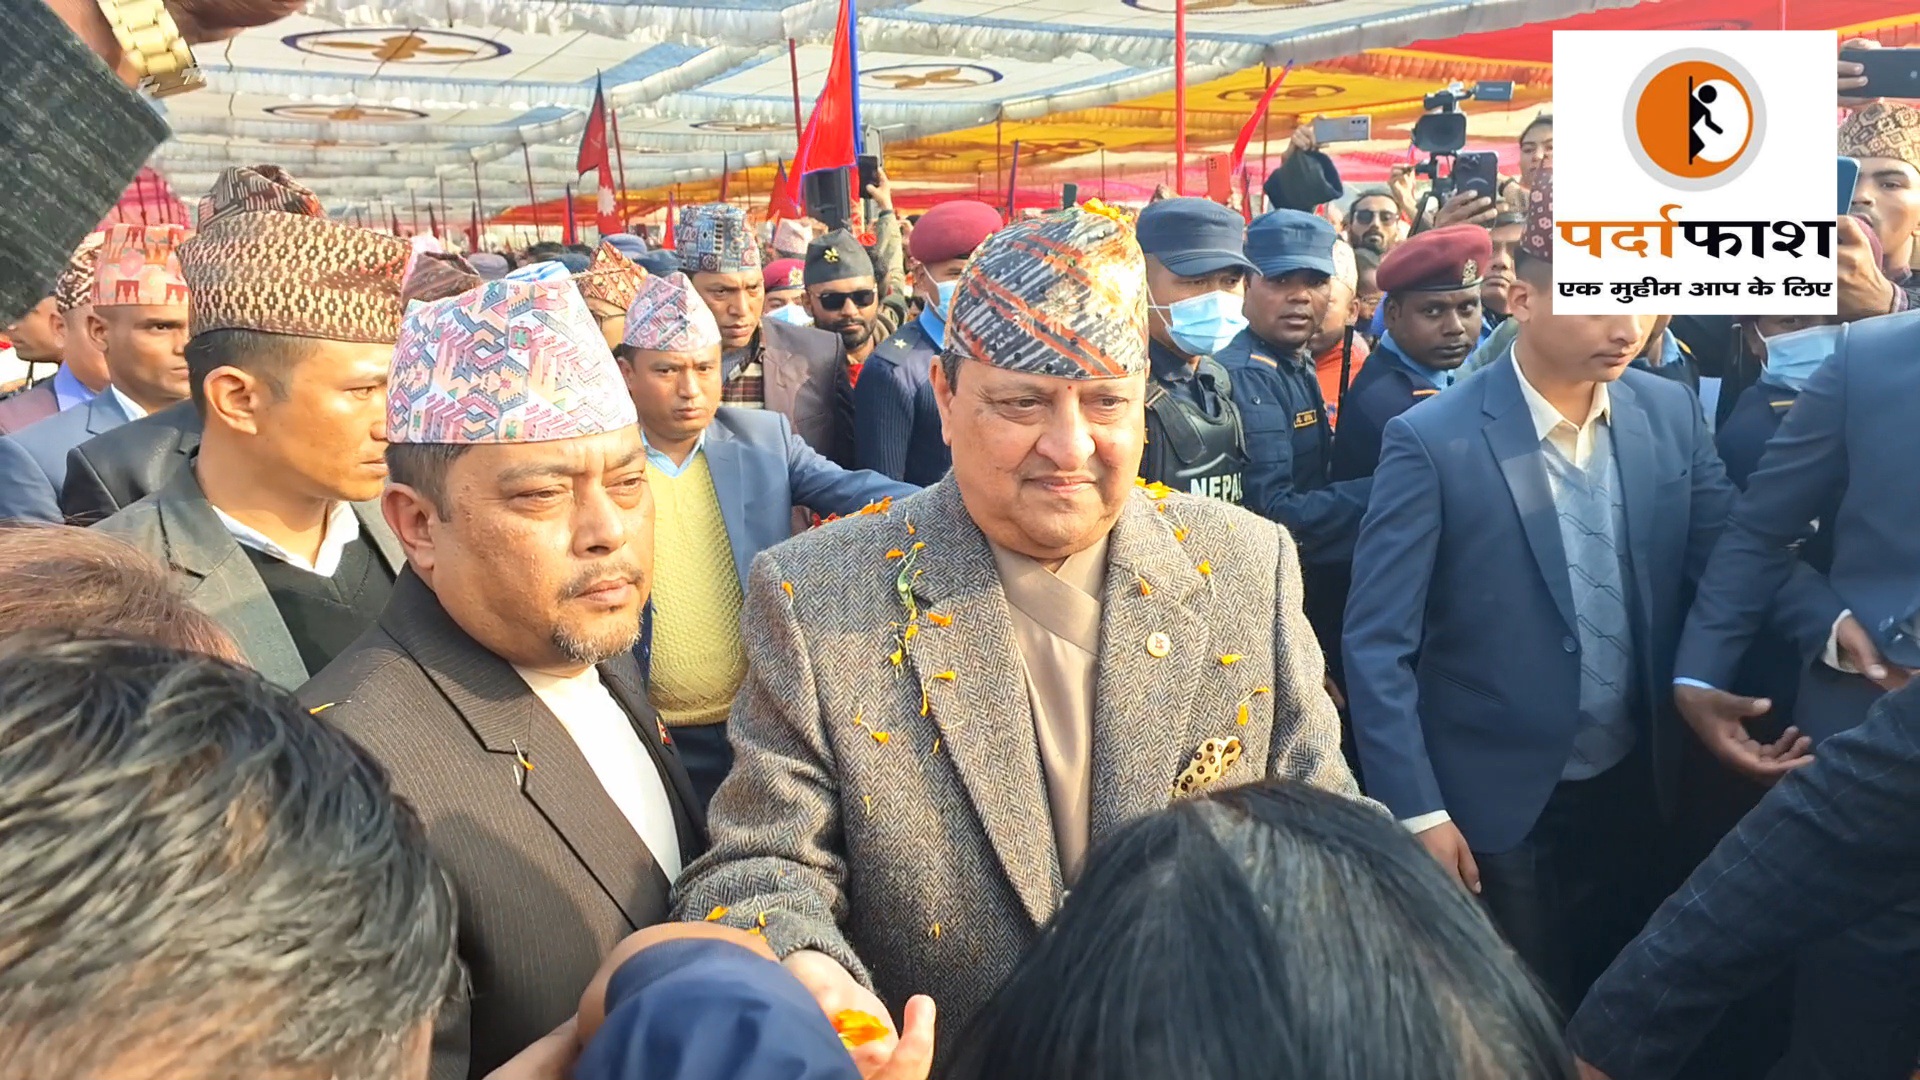 NEPAL:हाम्रो राजा हाम्रो देश के नारों से गुंजा जर्रा जर्रा भैरहवा